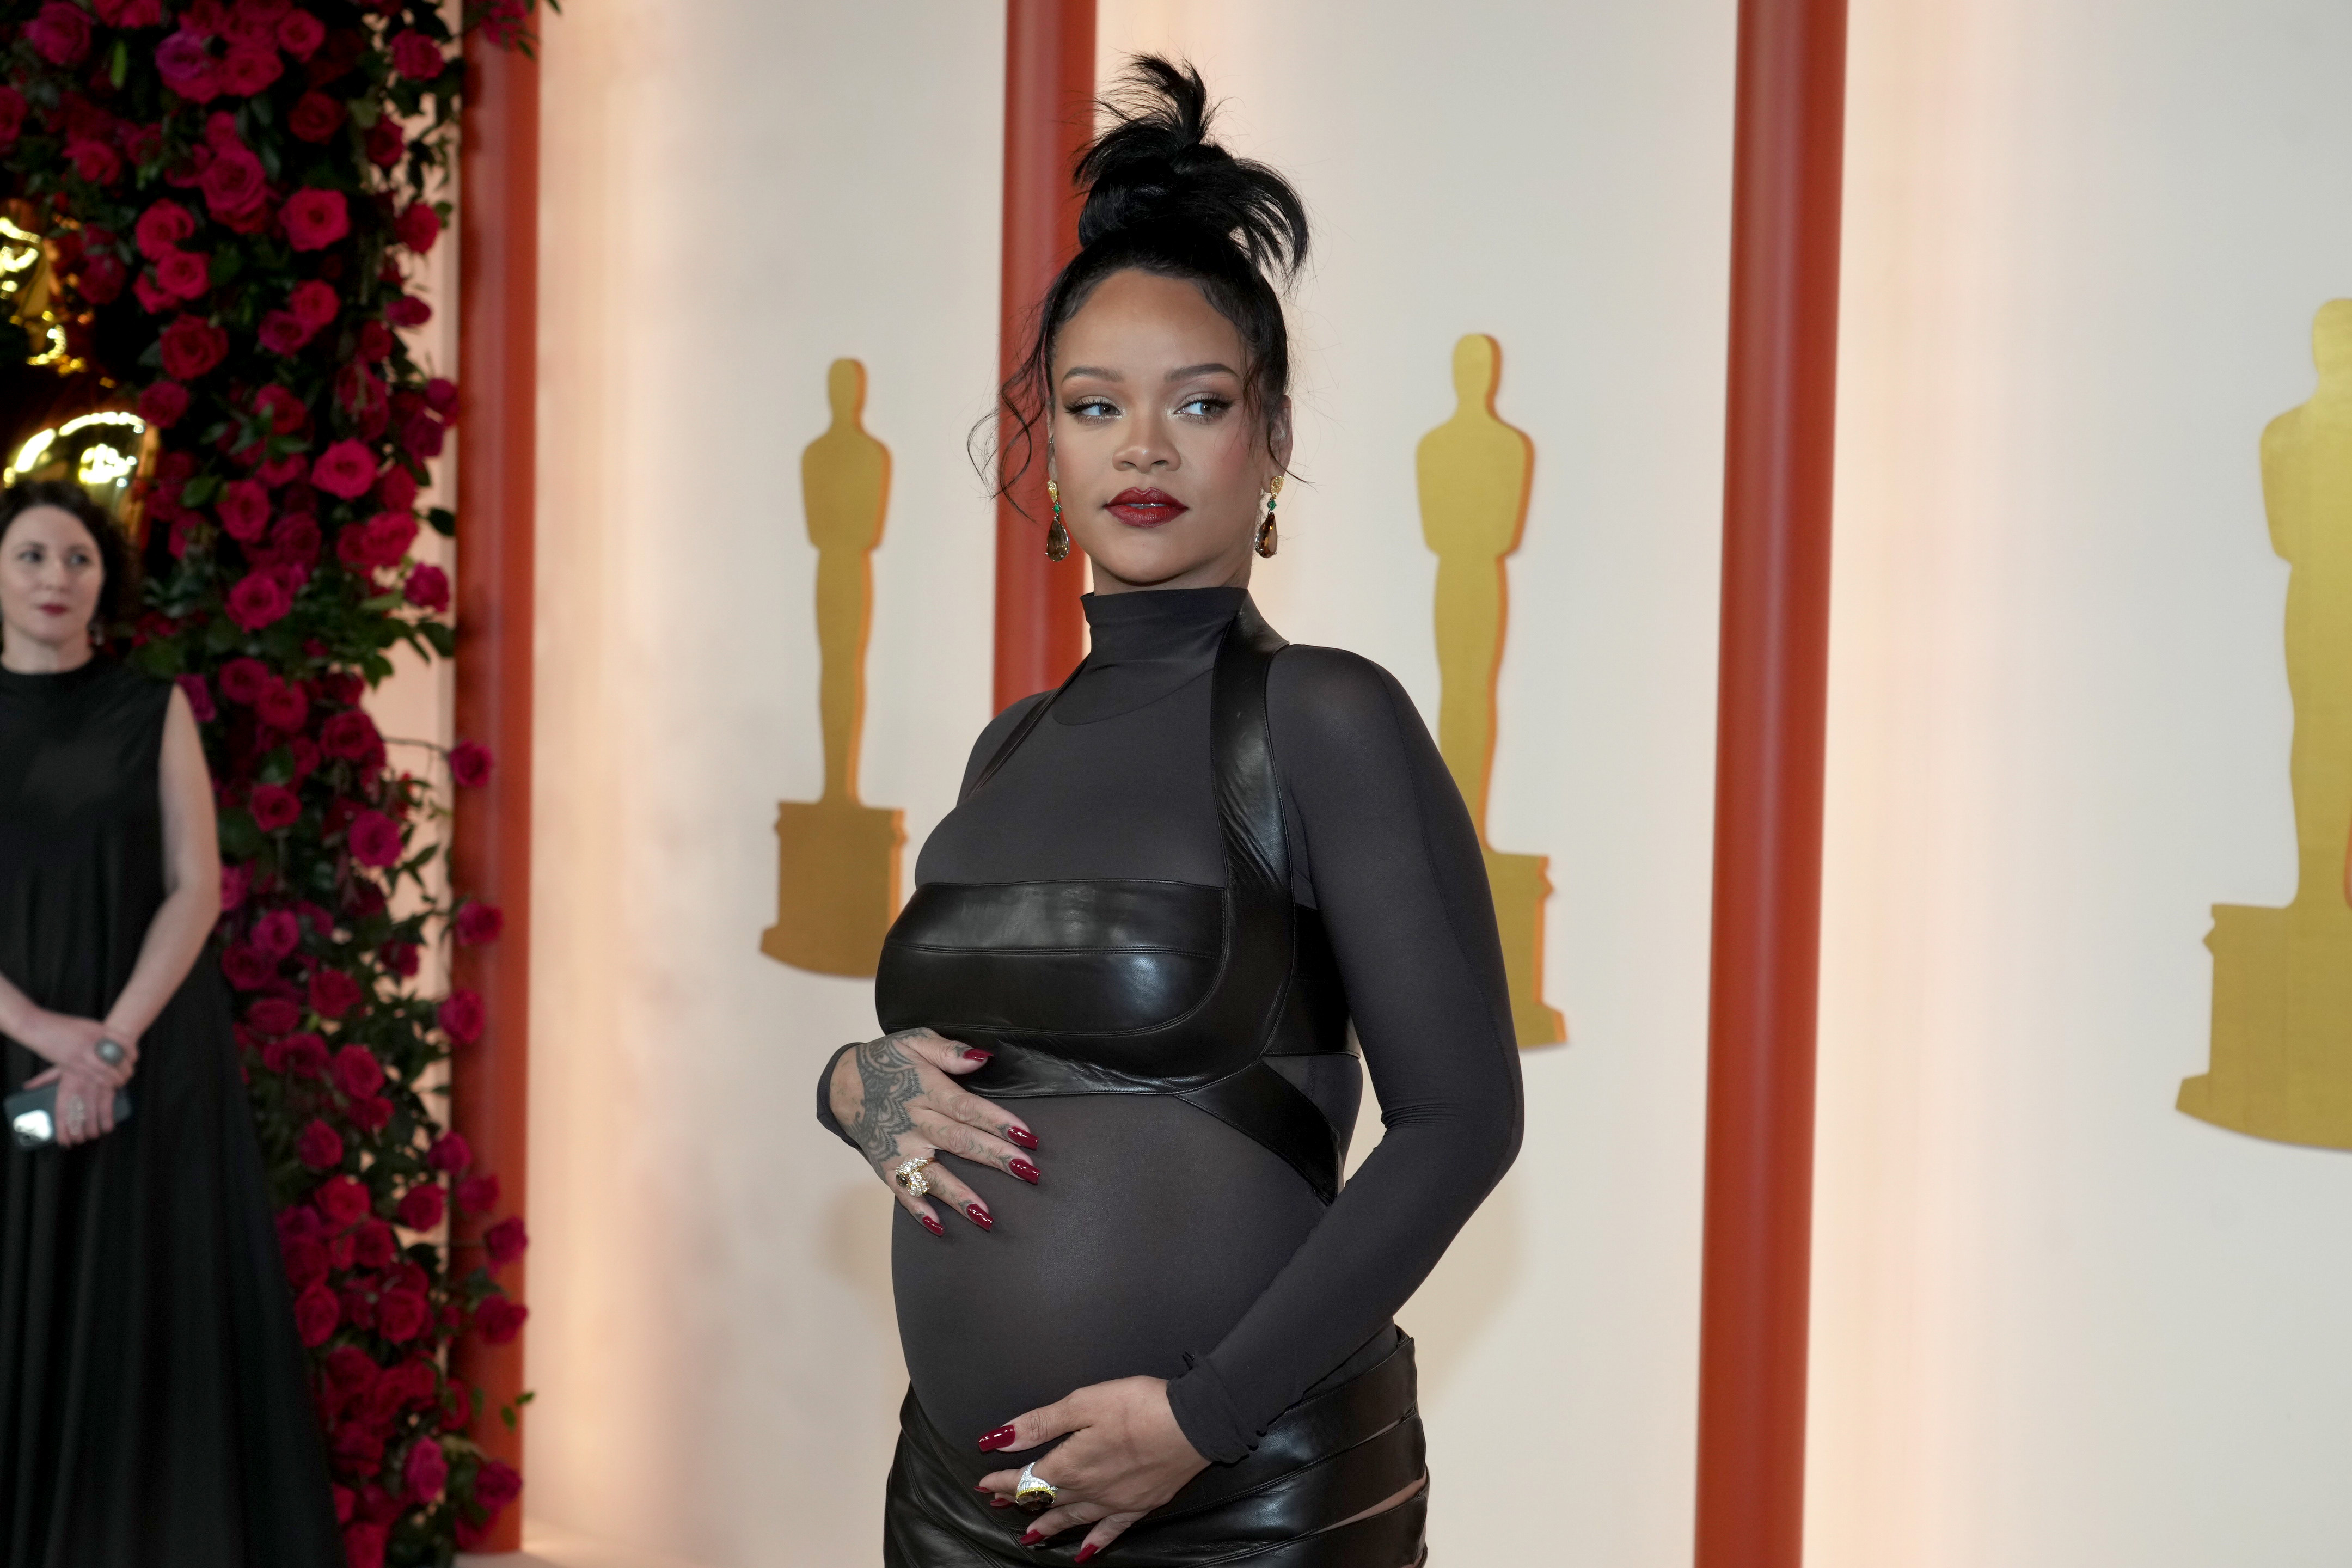 Rihanna & Baby Fenty Hit Up Louis Vuitton For A Paris Shopping Spree